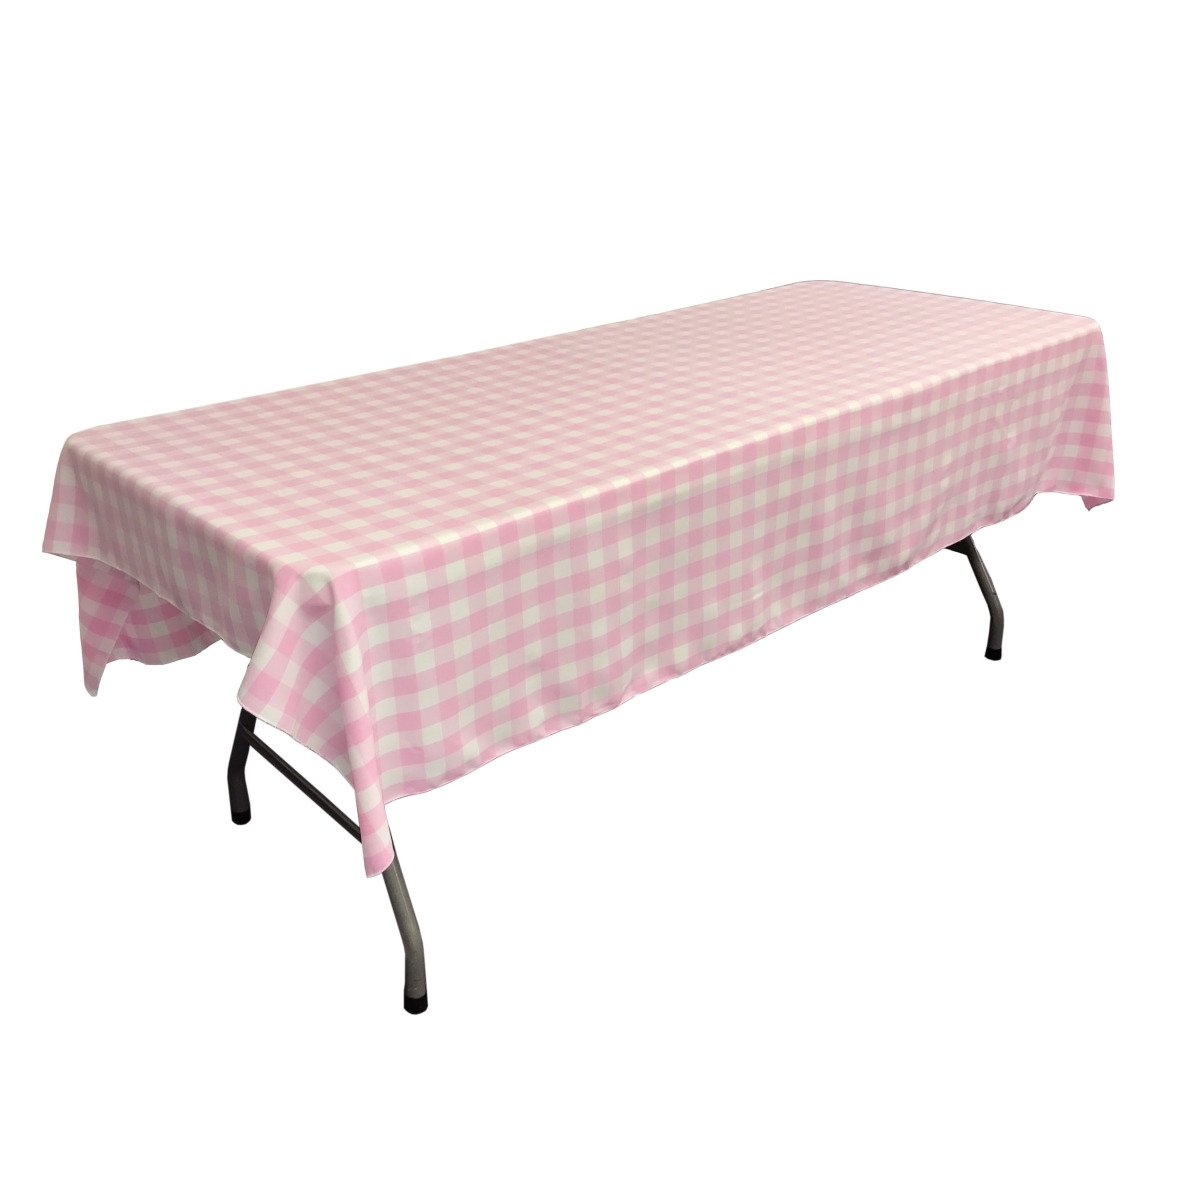 LA Linen TCcheck60x108-PinkK37 Polyester Gingham Checkered Rectangular Tablecloth, White & Pink - 60 x 108 in.